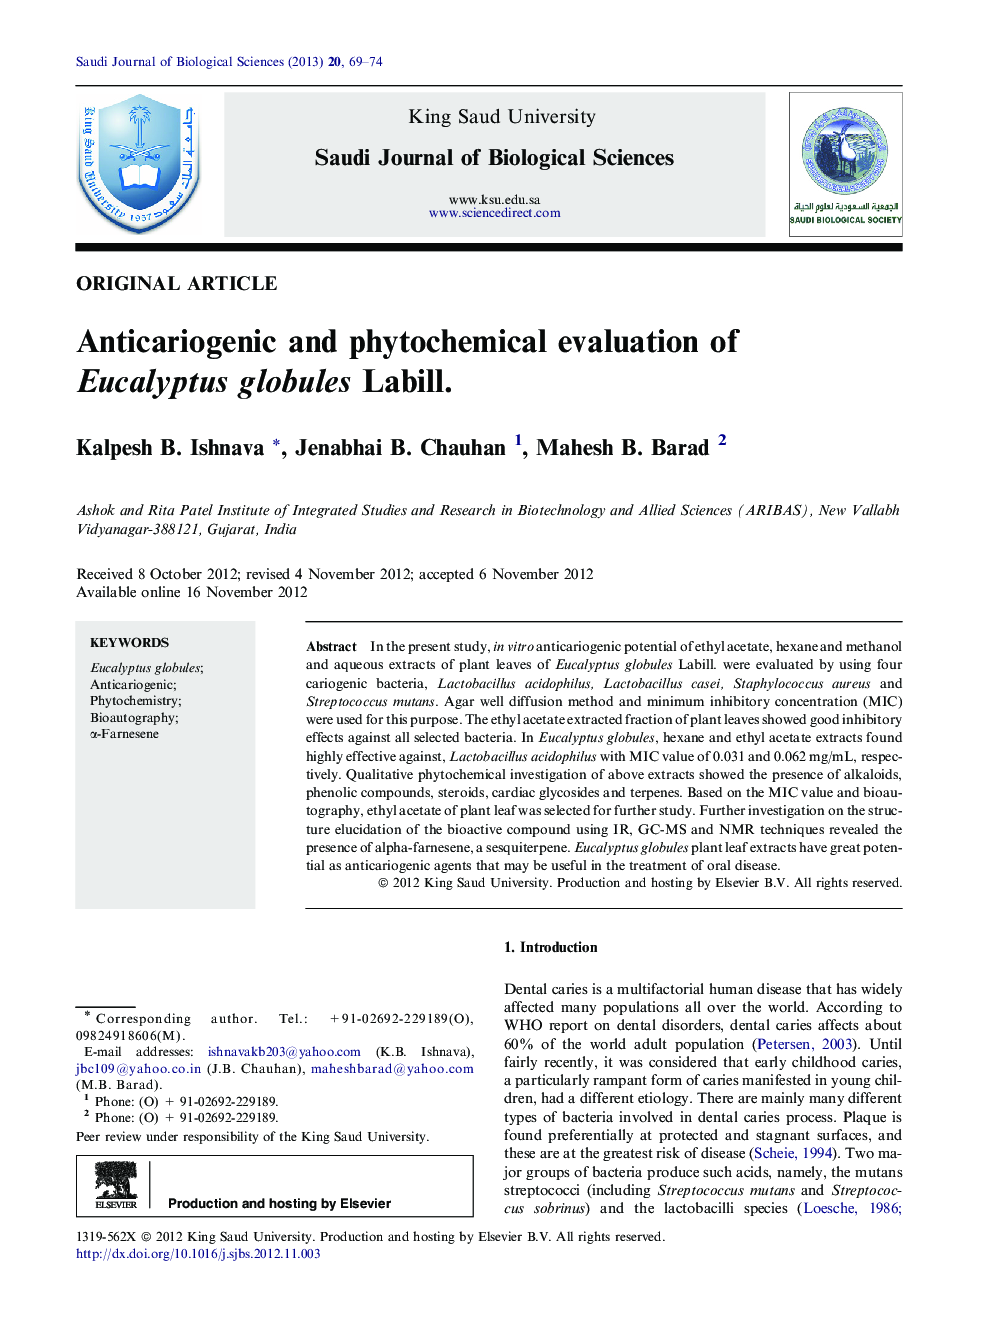 Anticariogenic and phytochemical evaluation of Eucalyptus globules Labill. 